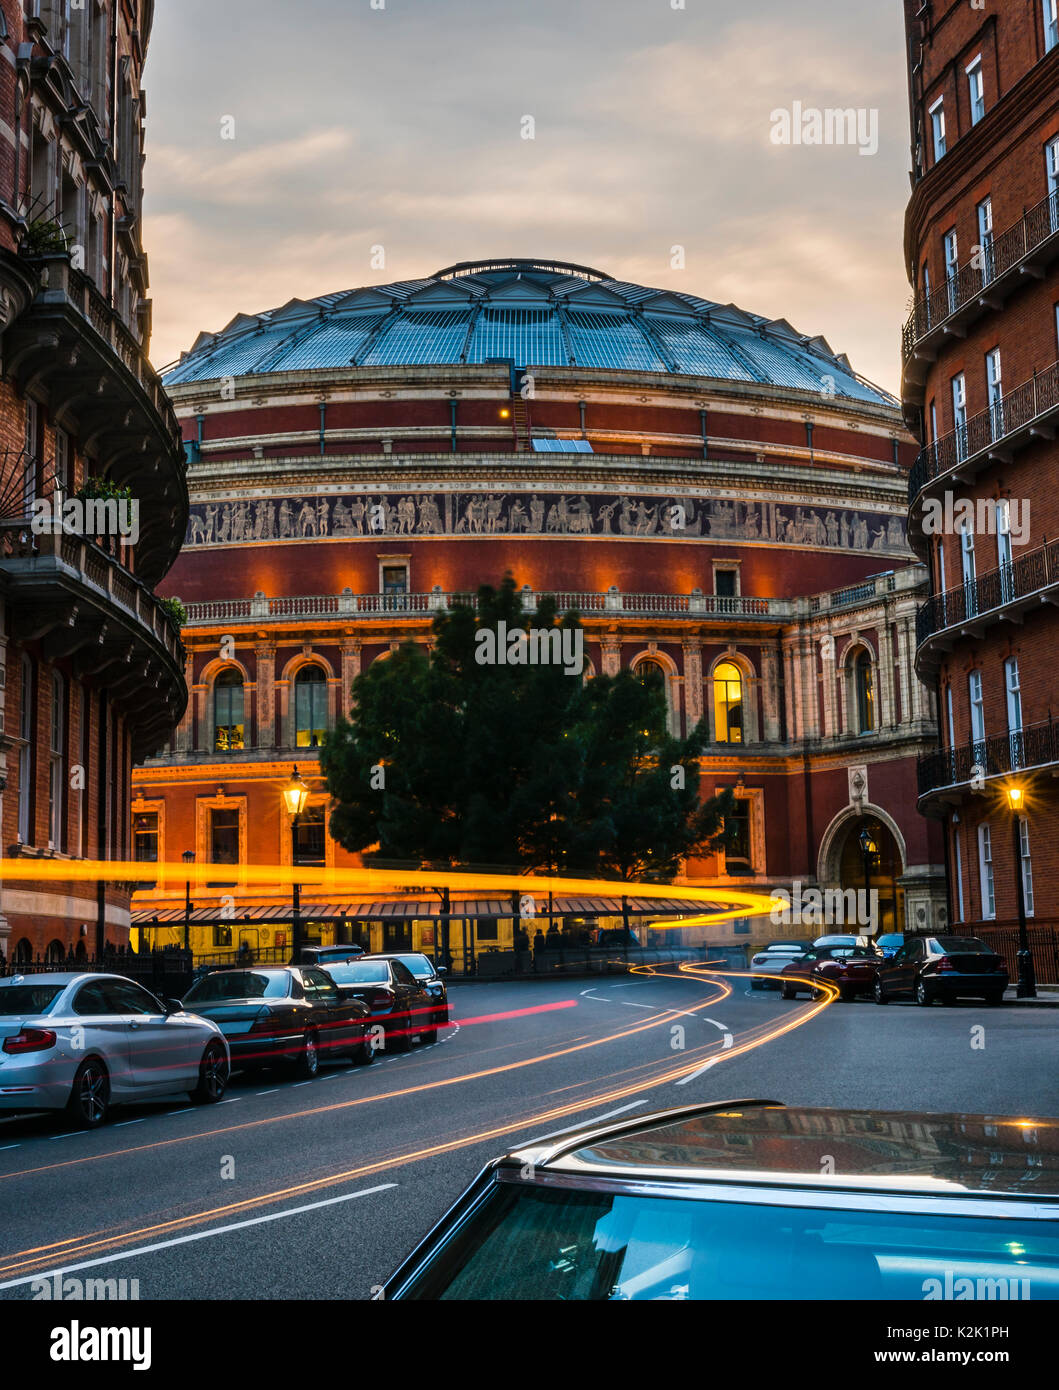 Royal Albert Hall at sunset, London, UK Stock Photo